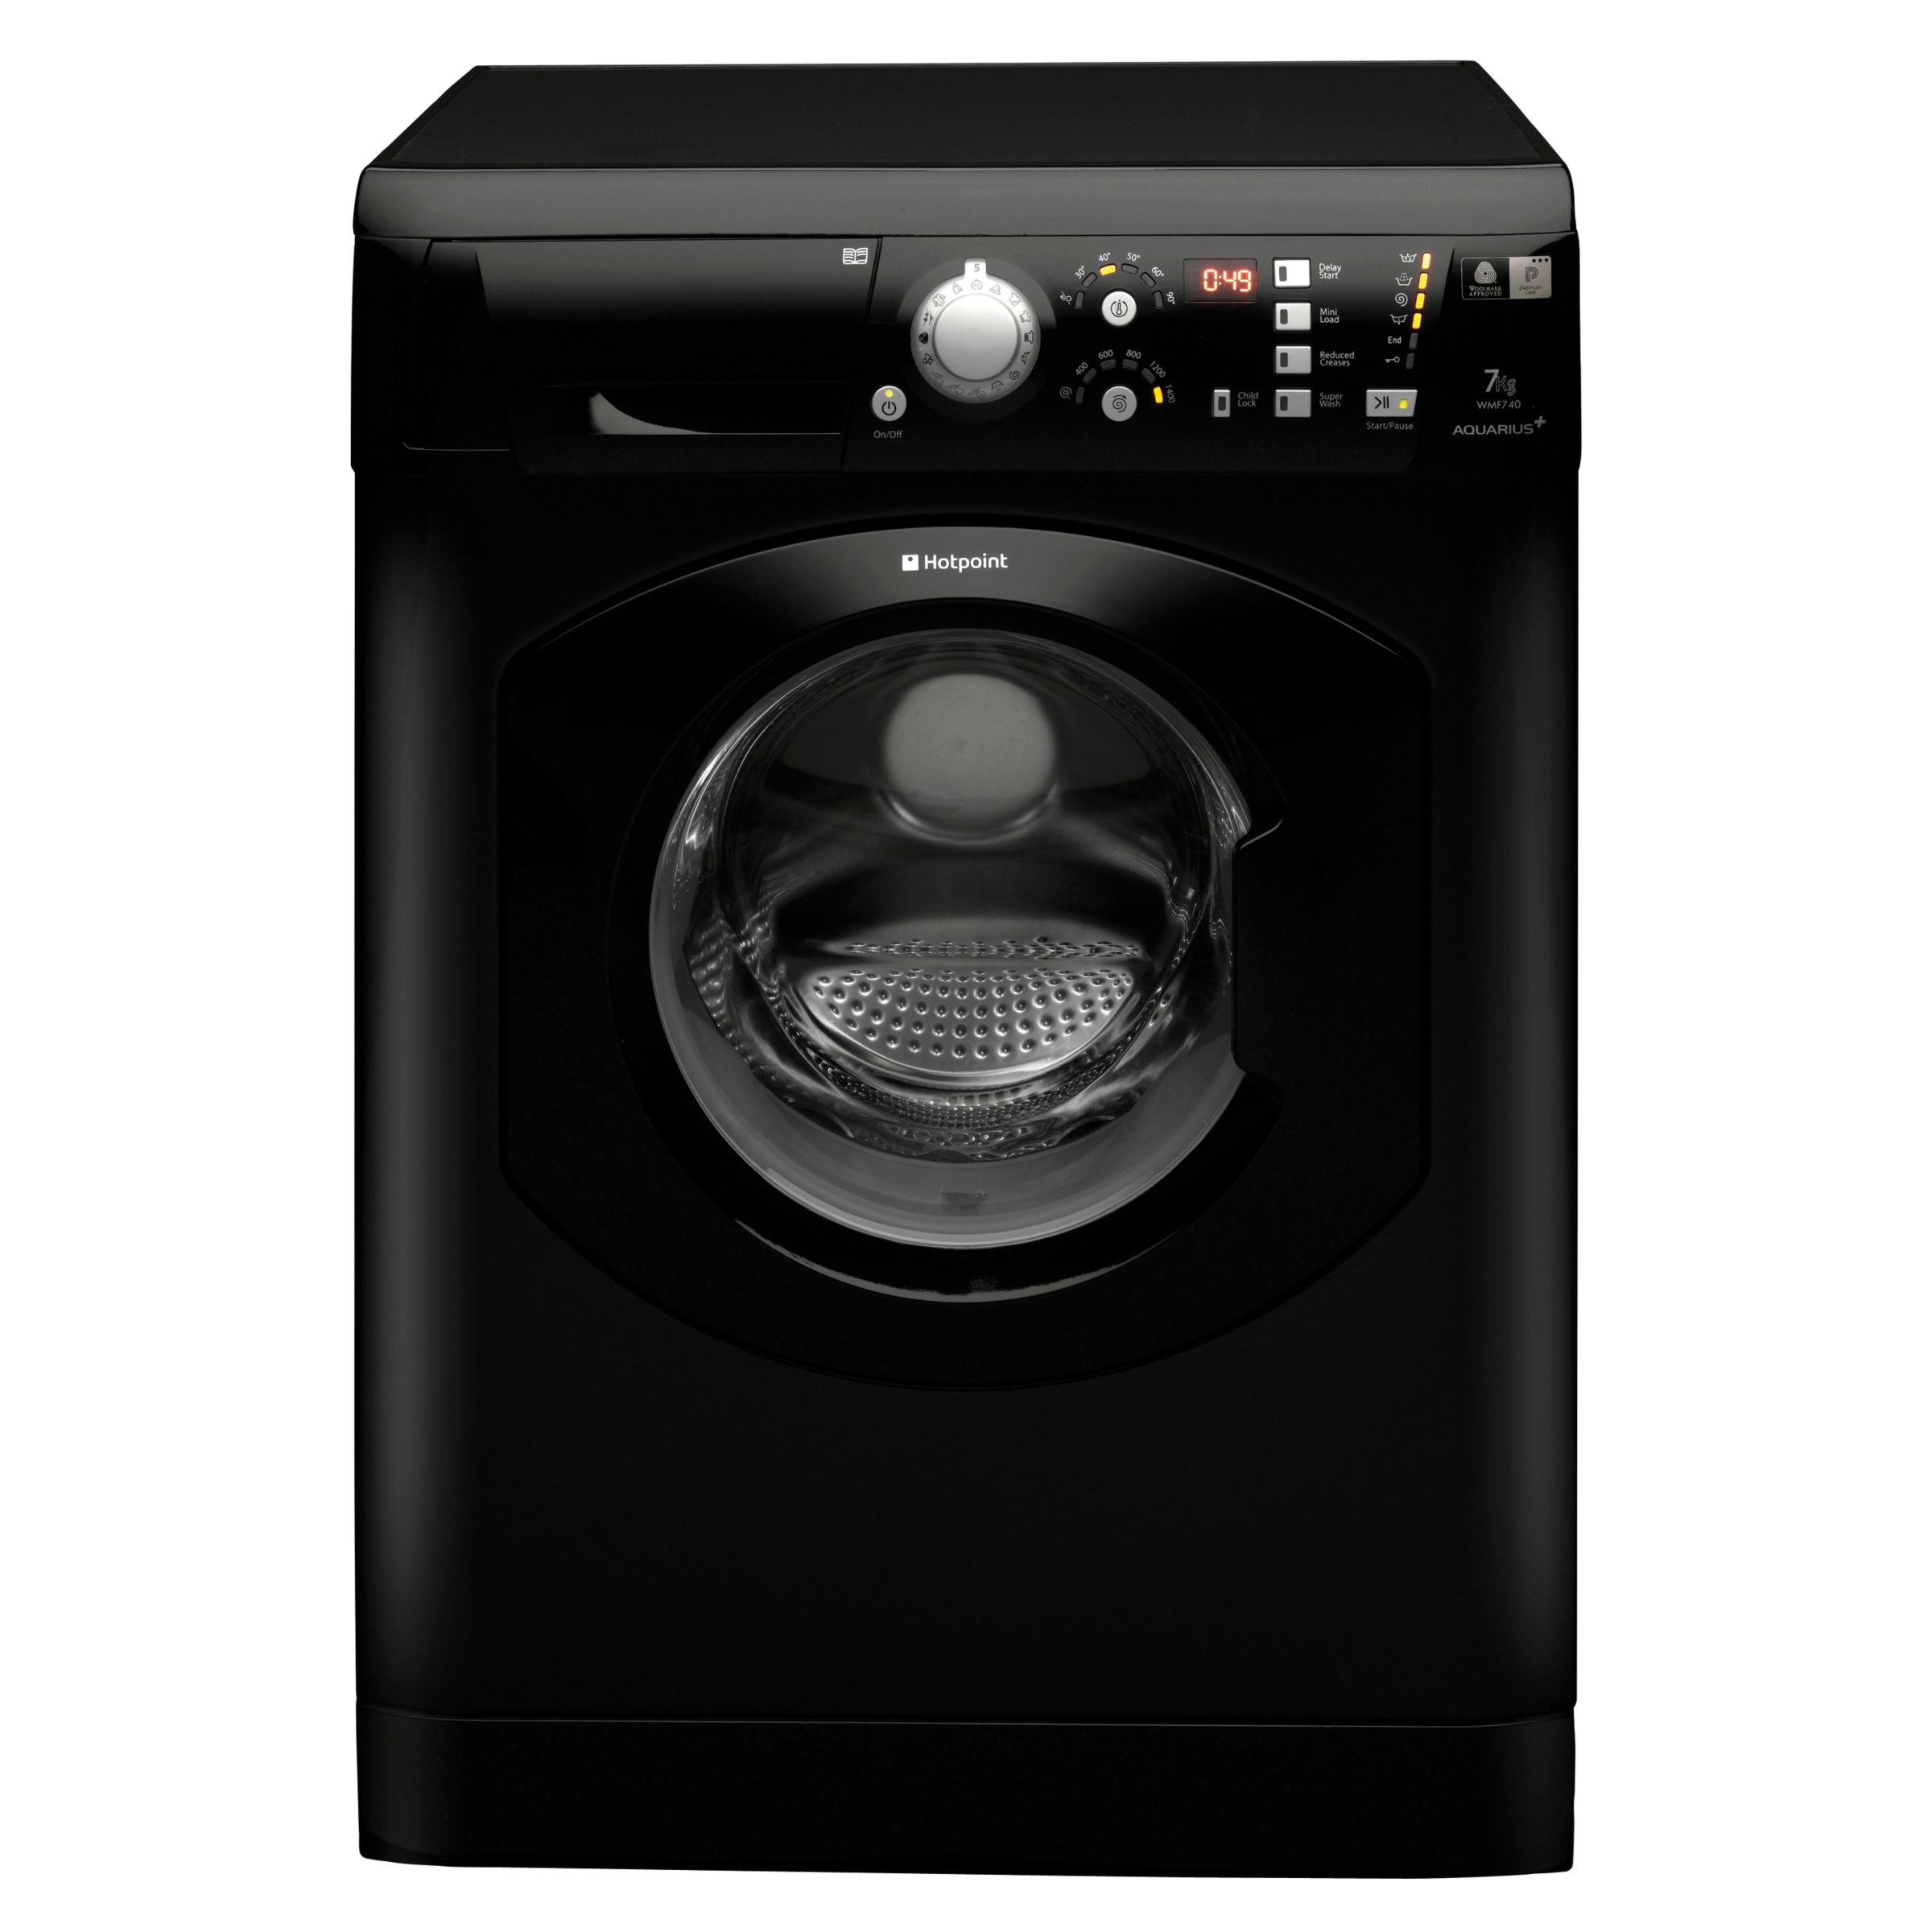 Hotpoint WMF740K Washing Machine, Black at JohnLewis